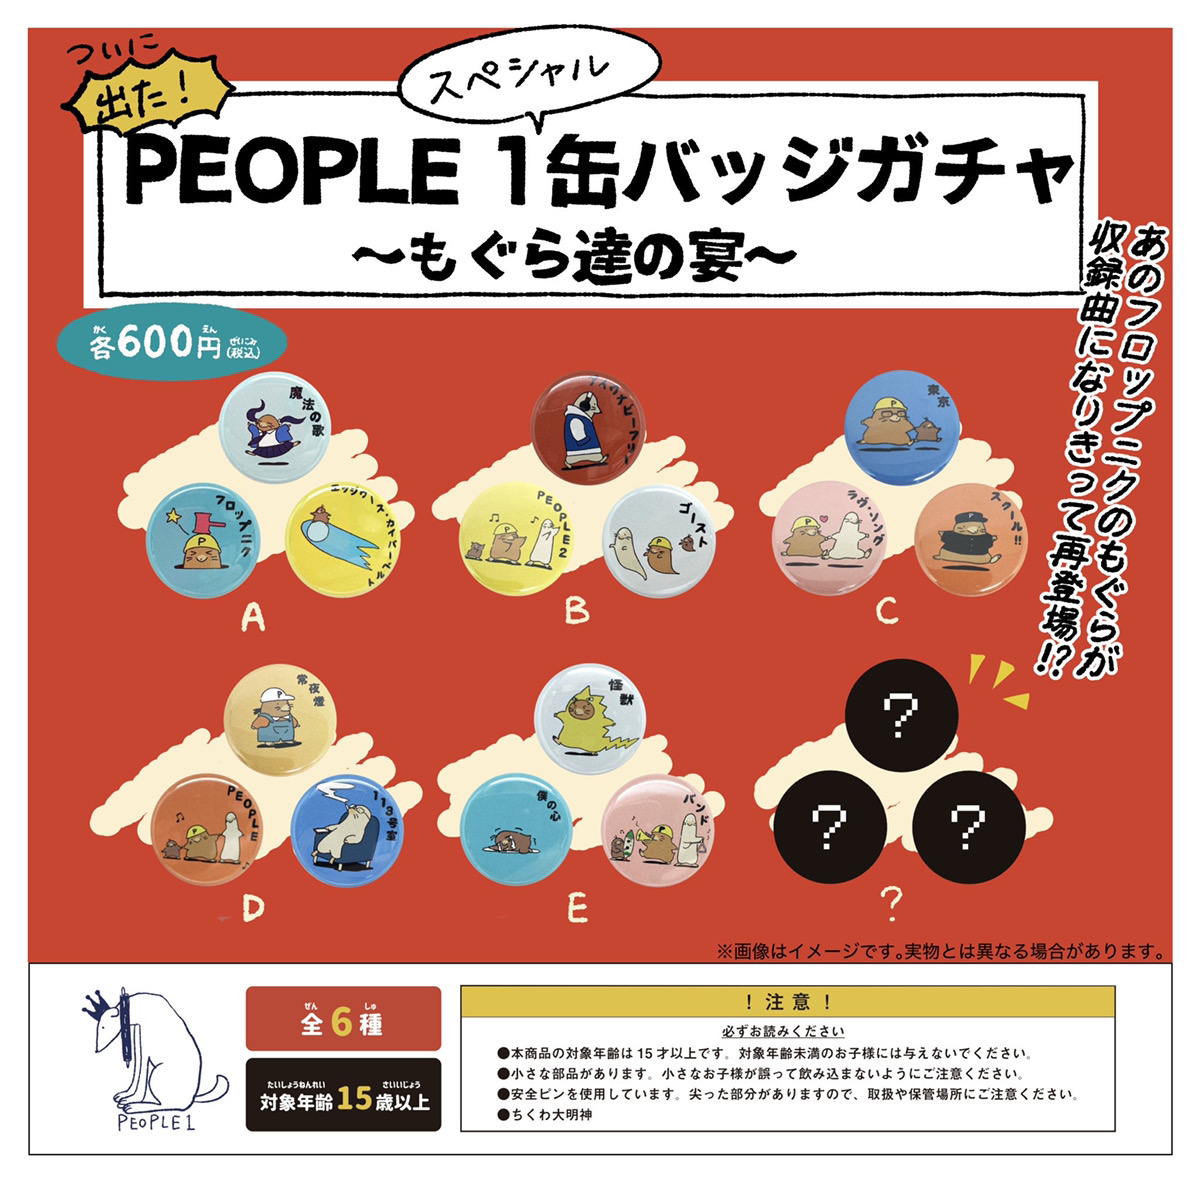 1st Album『PEOPLE』オフィシャルグッズ オンライン販売開始！